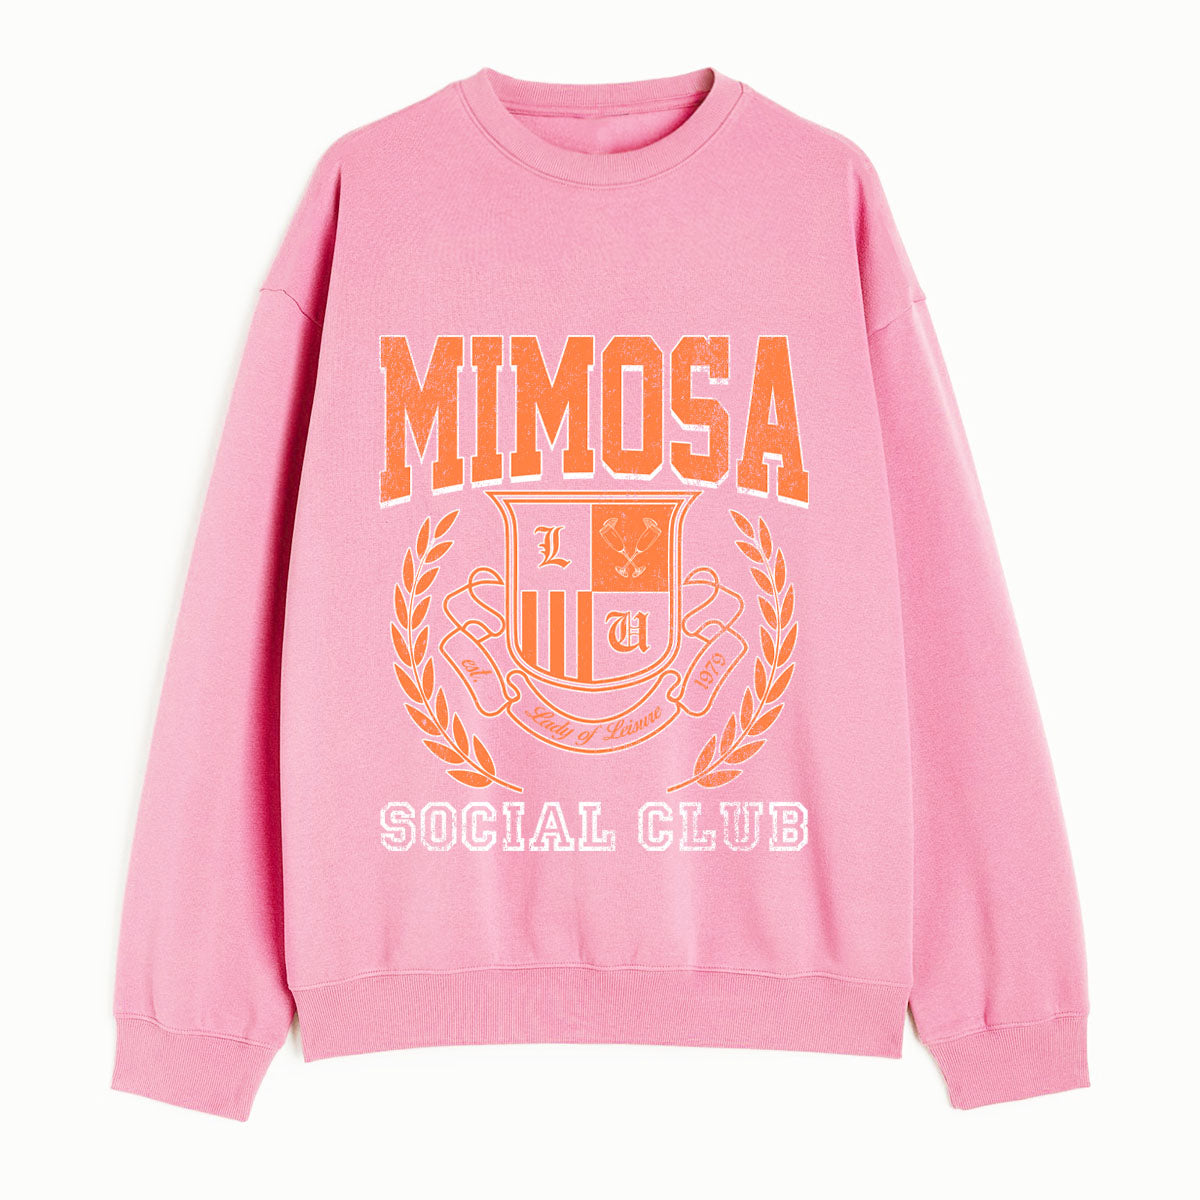 Mimosa Social Club Sweatshirt